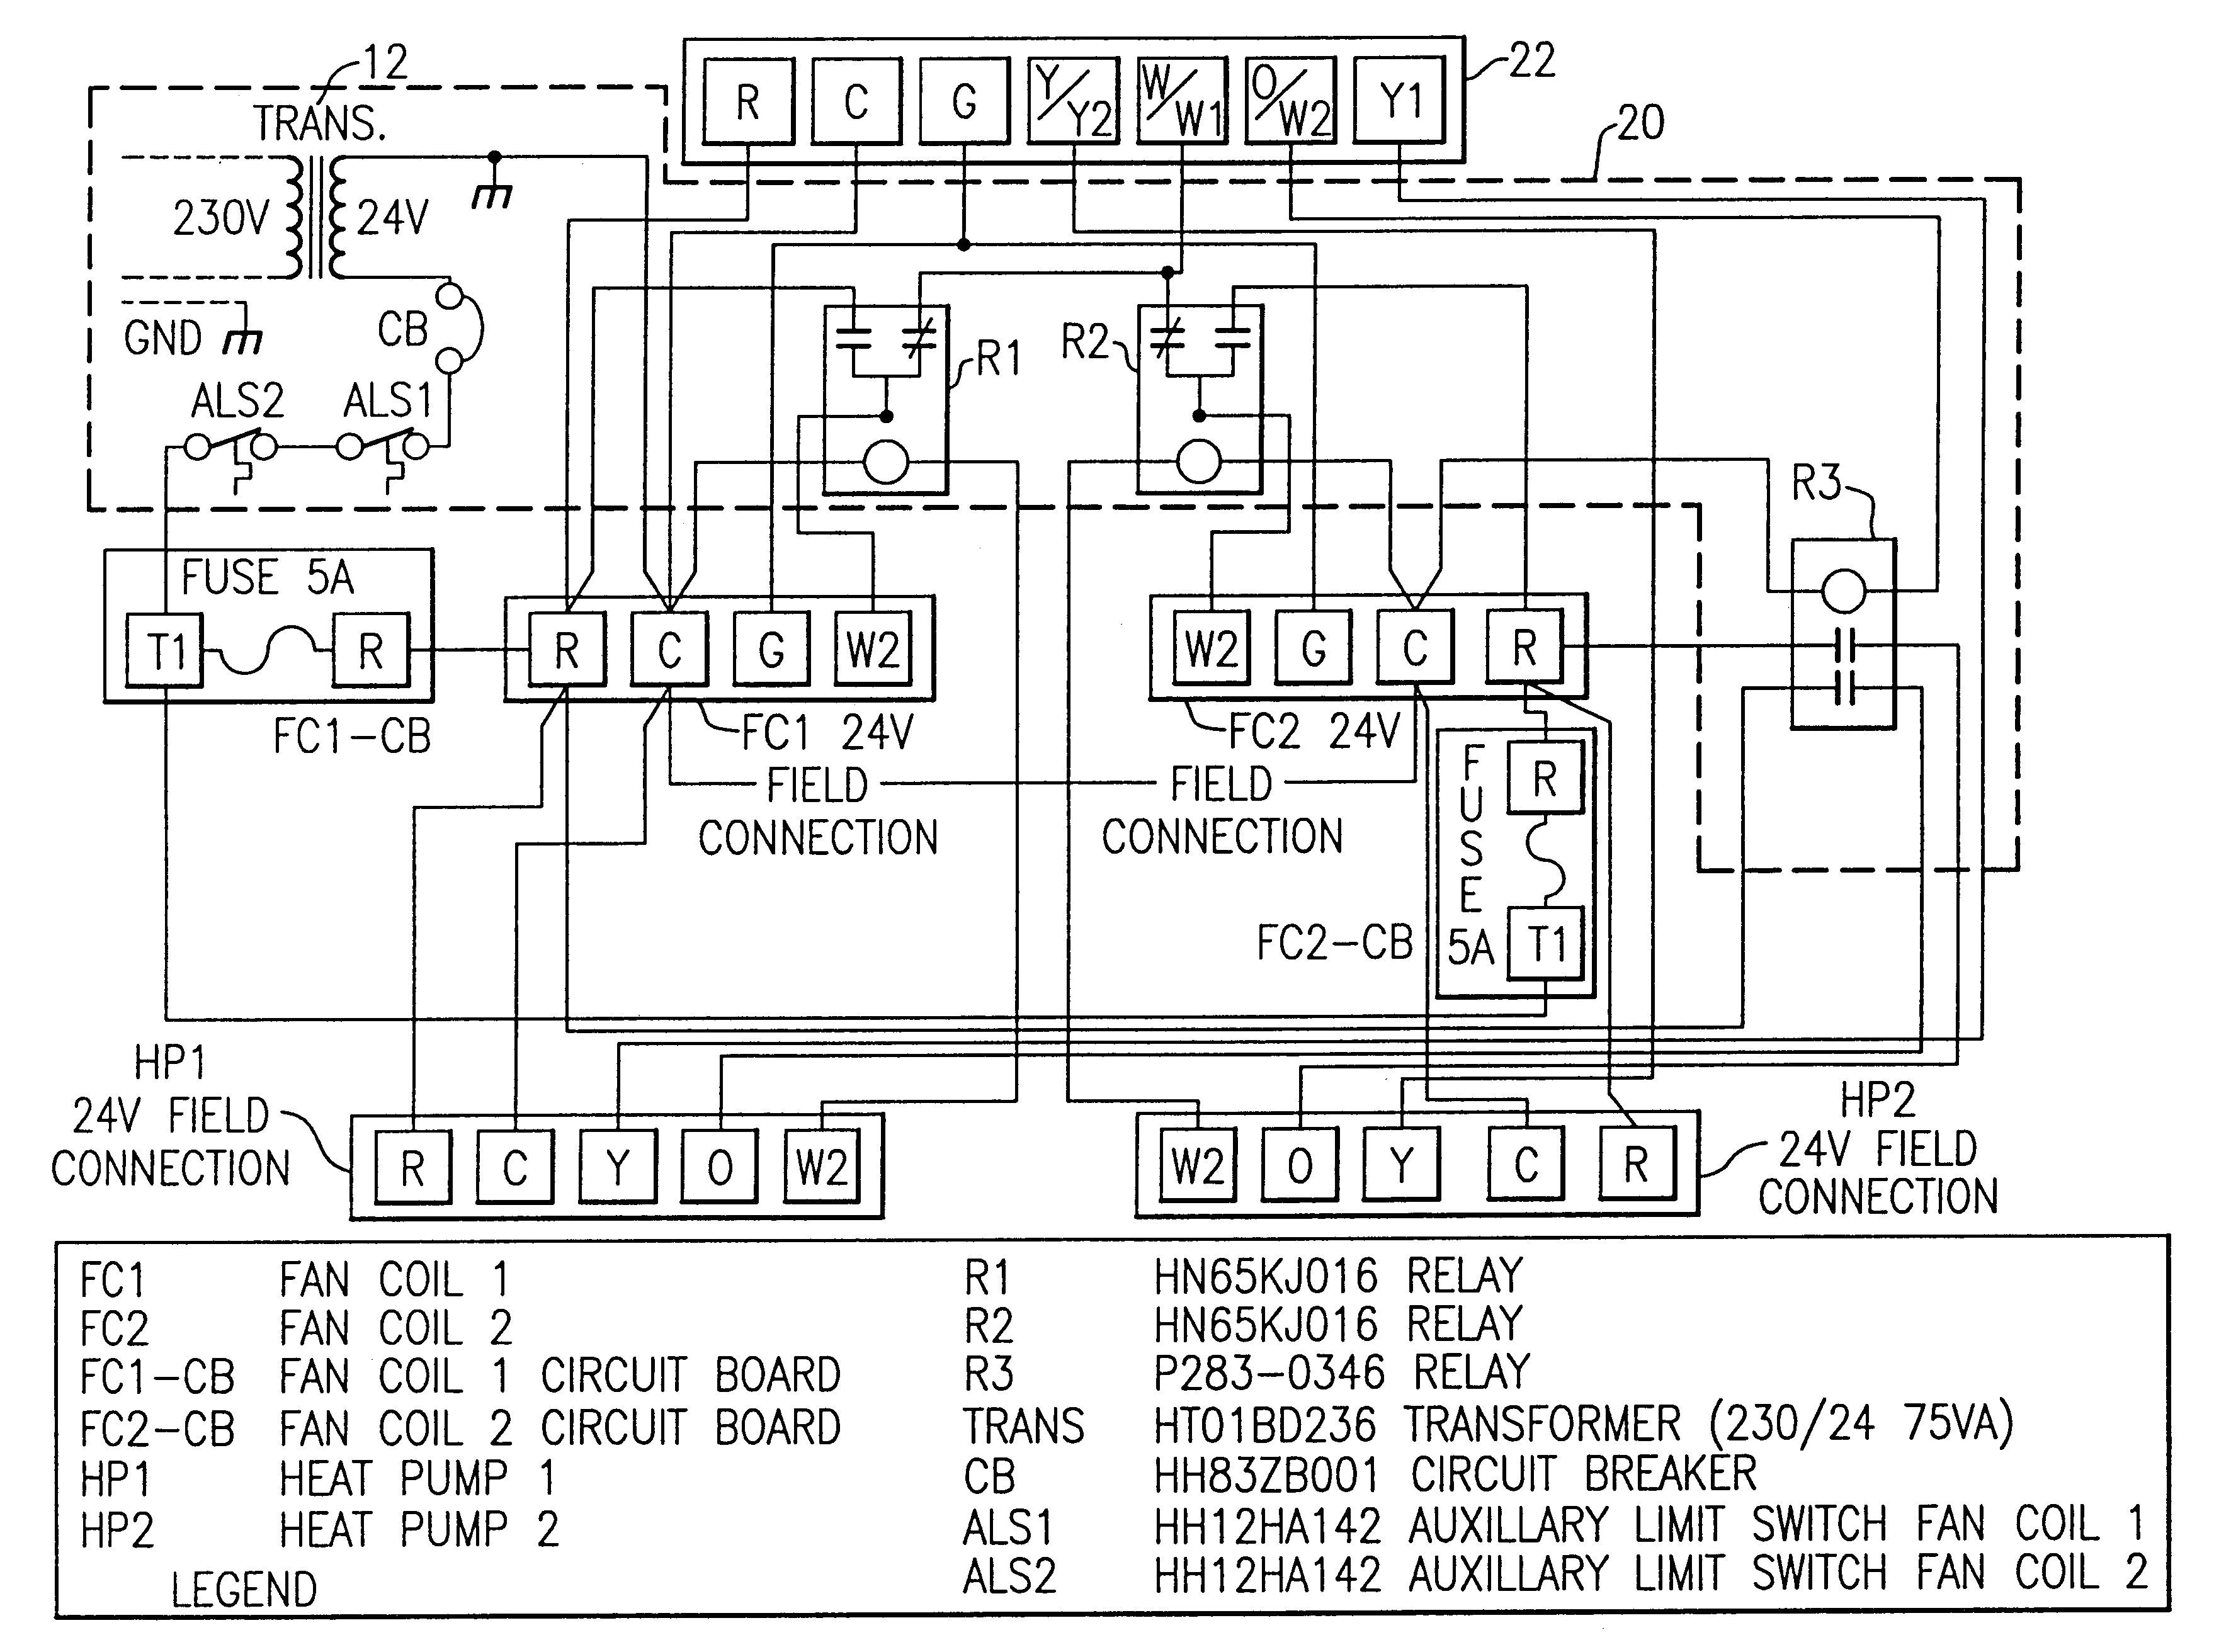 vav box wiring diagram wiring diagram pagevav box wiring diagram wiring diagram schematic vav box wiring